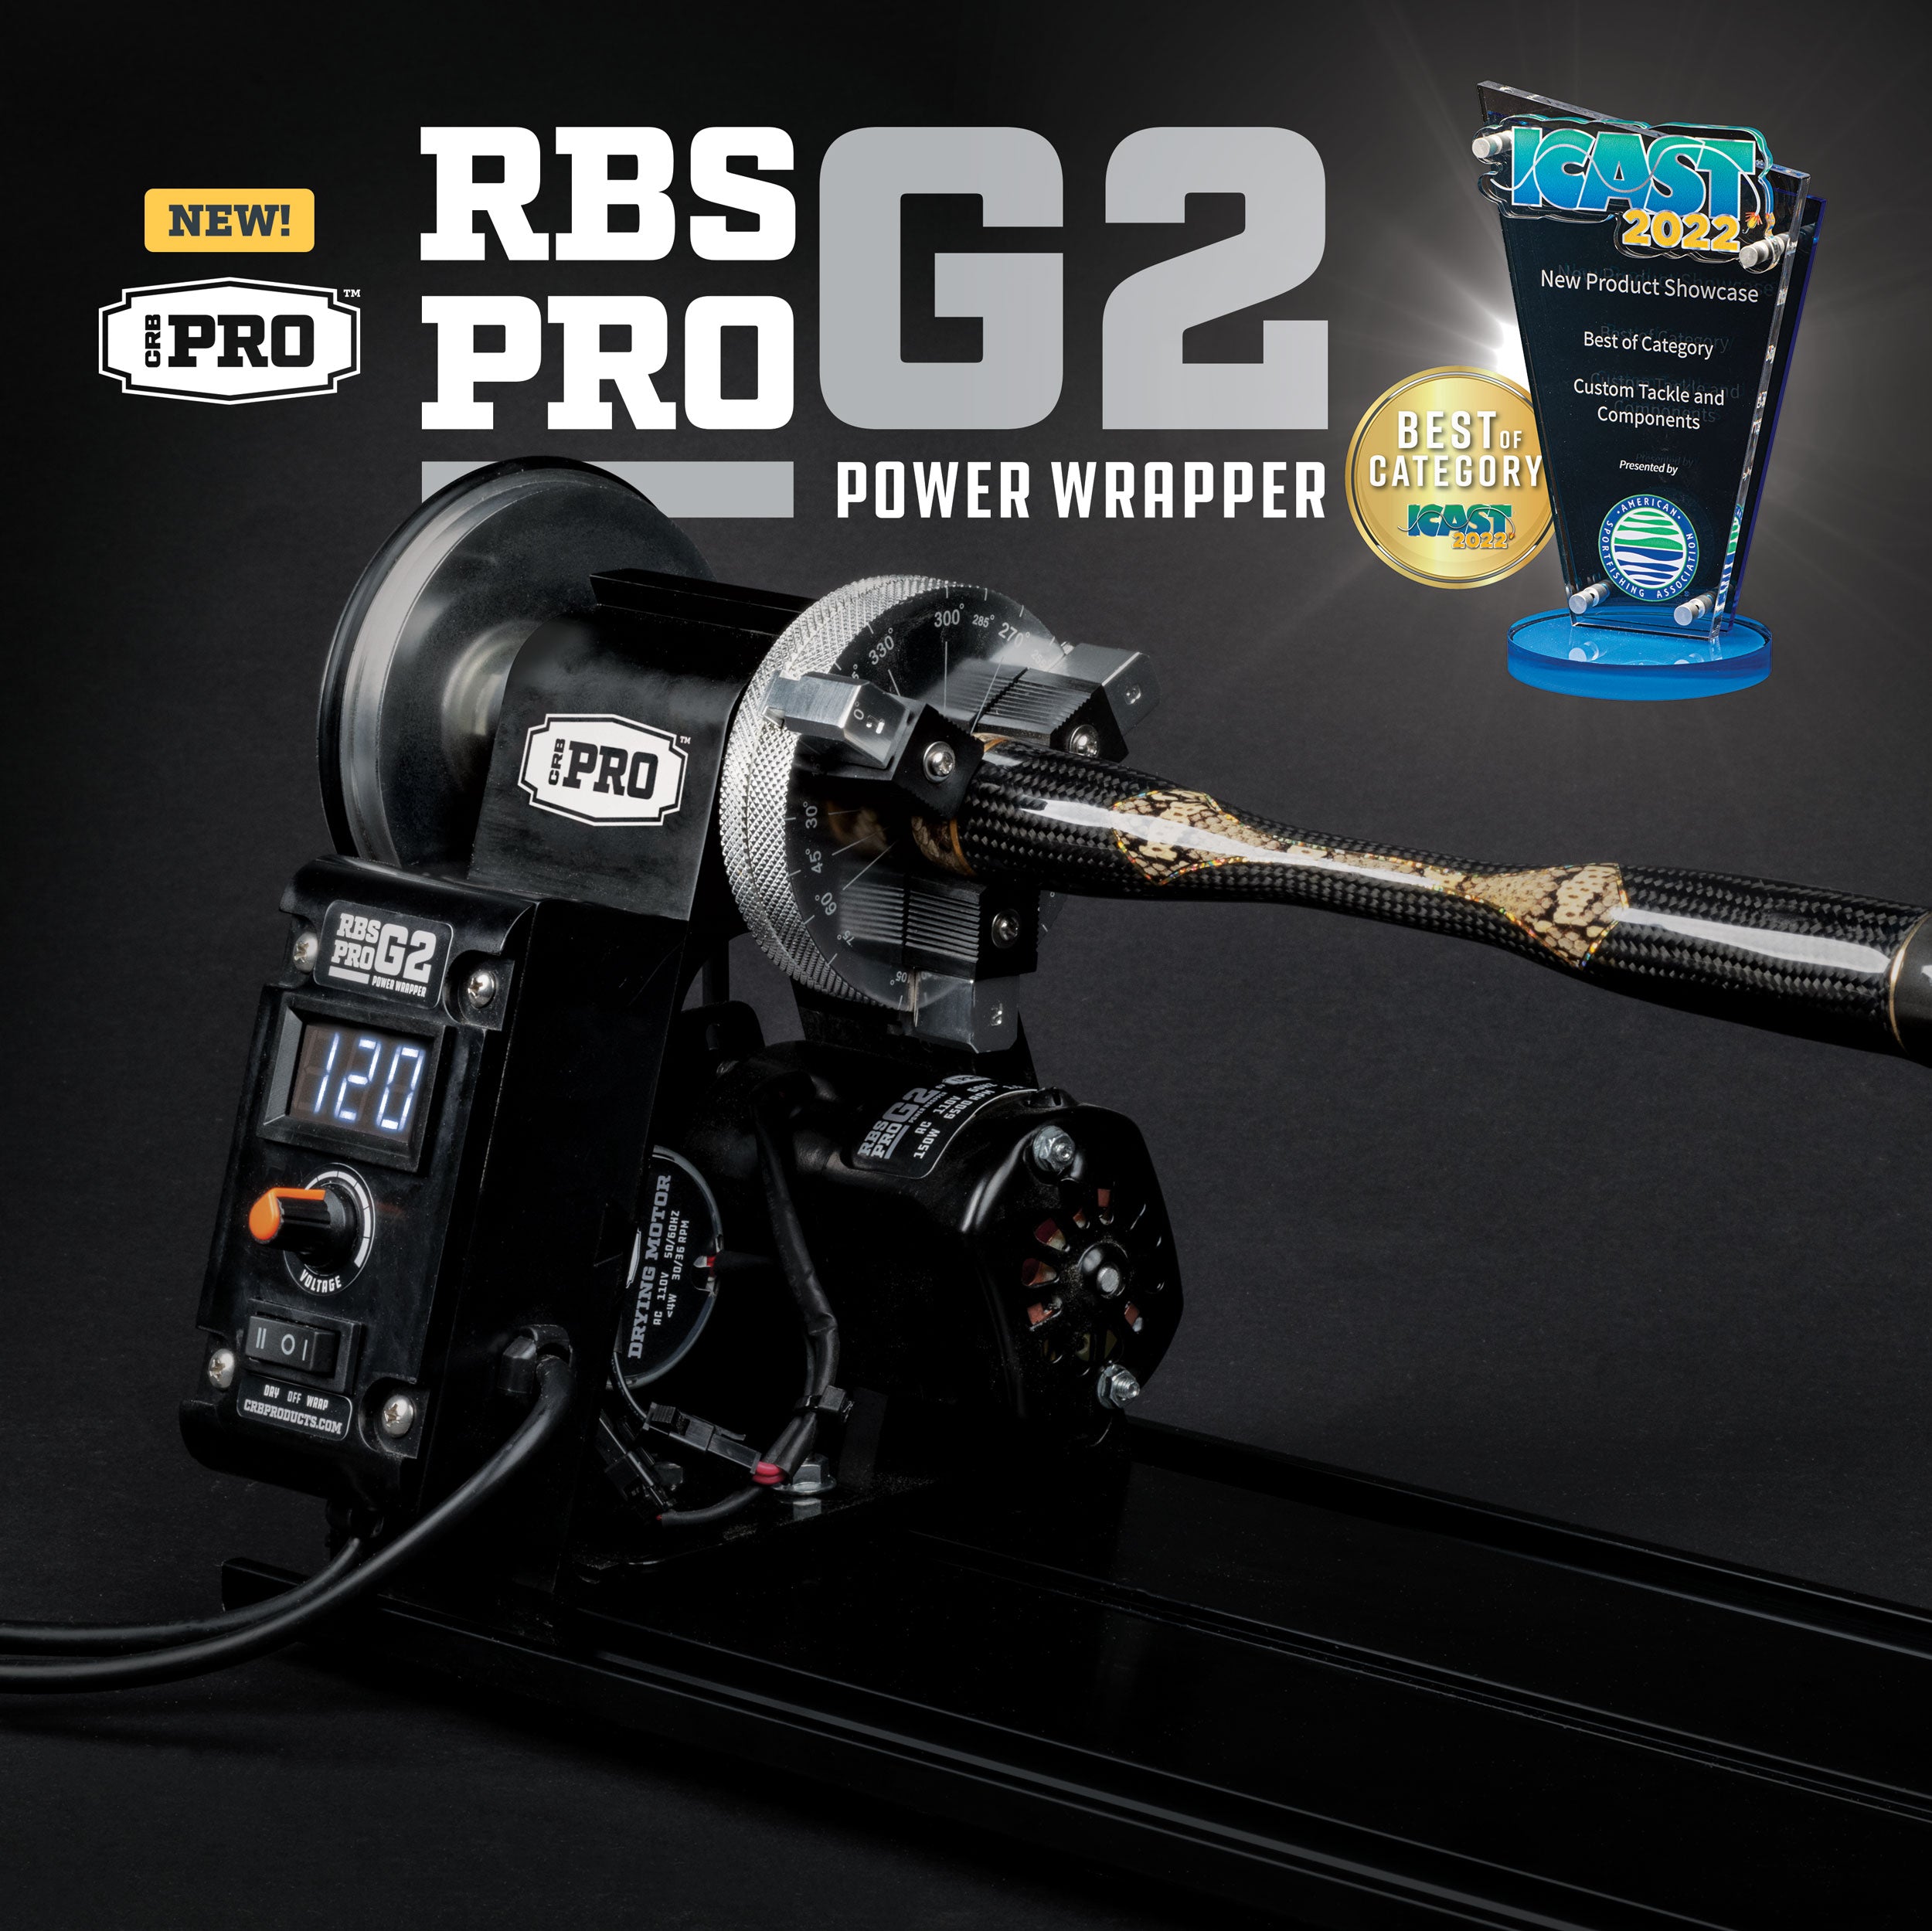 RBS PRO G2 Power Wrapper